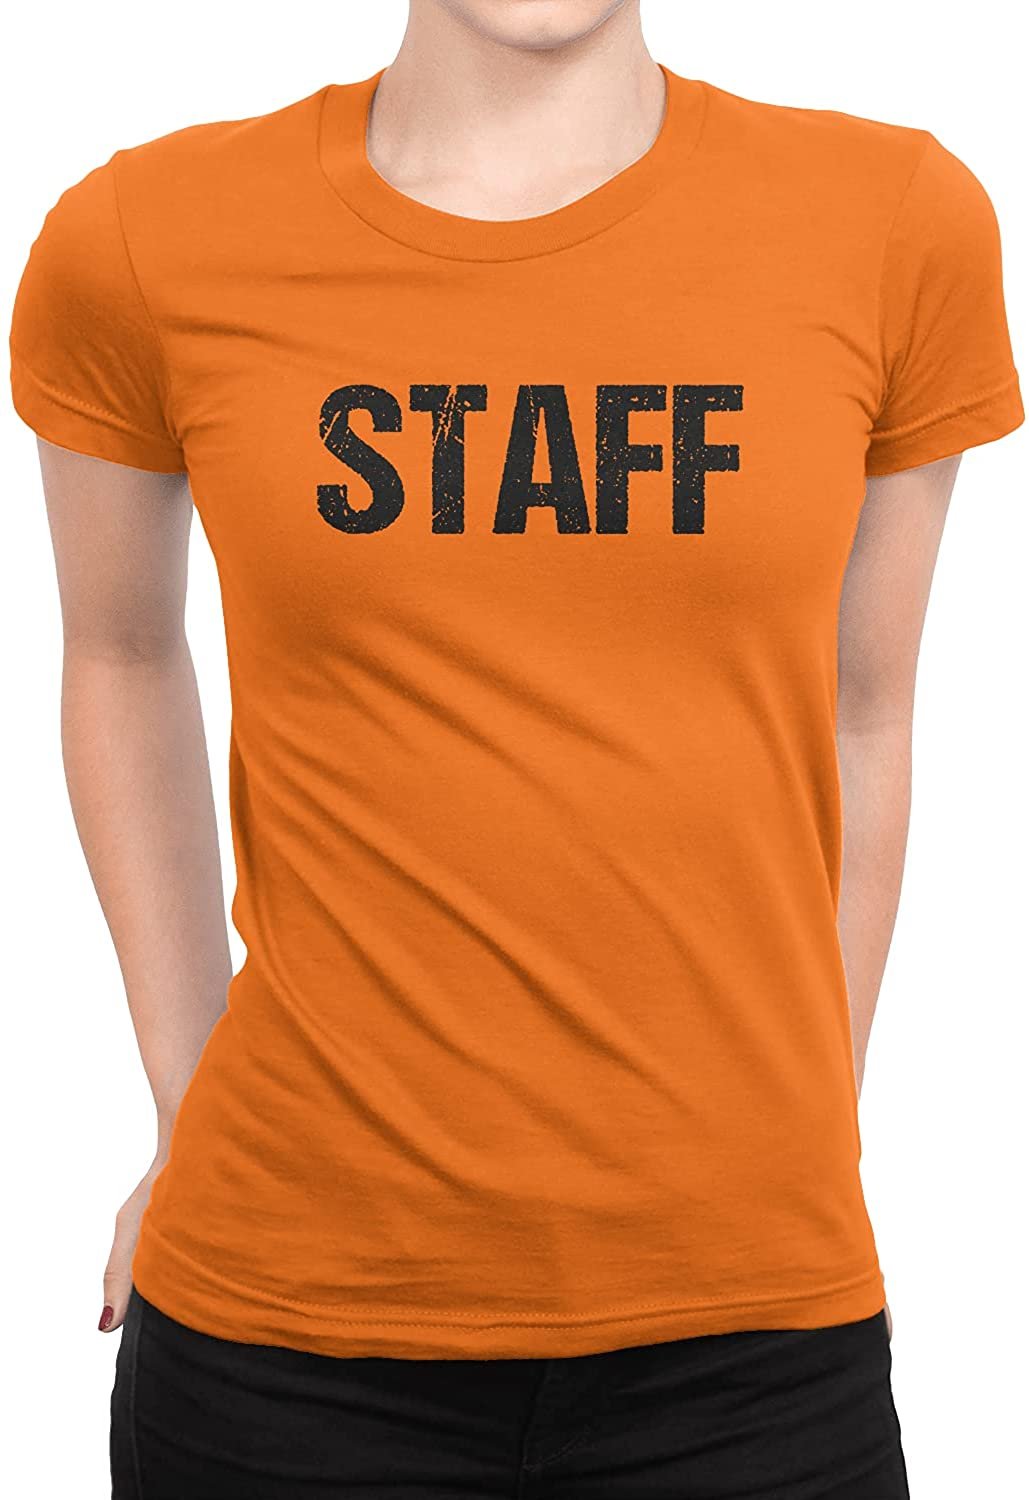 NYC FACTORY Staff Ladies Tee (Distressed, Orange, Women's Large)